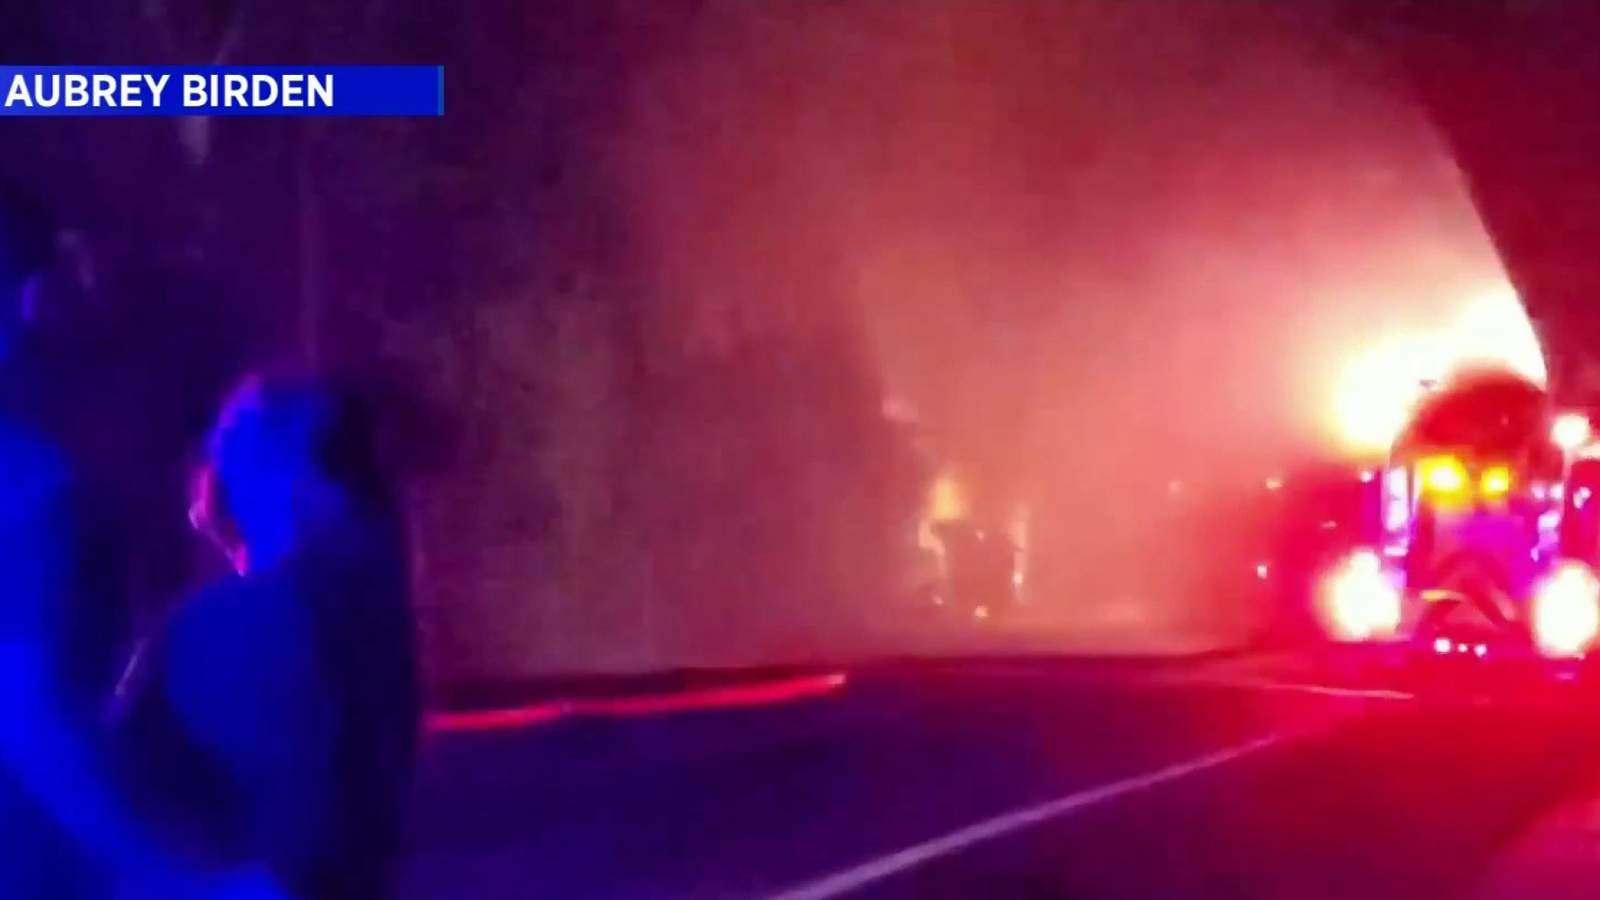 Fiery crash near Windermere sends flames into sky for hours